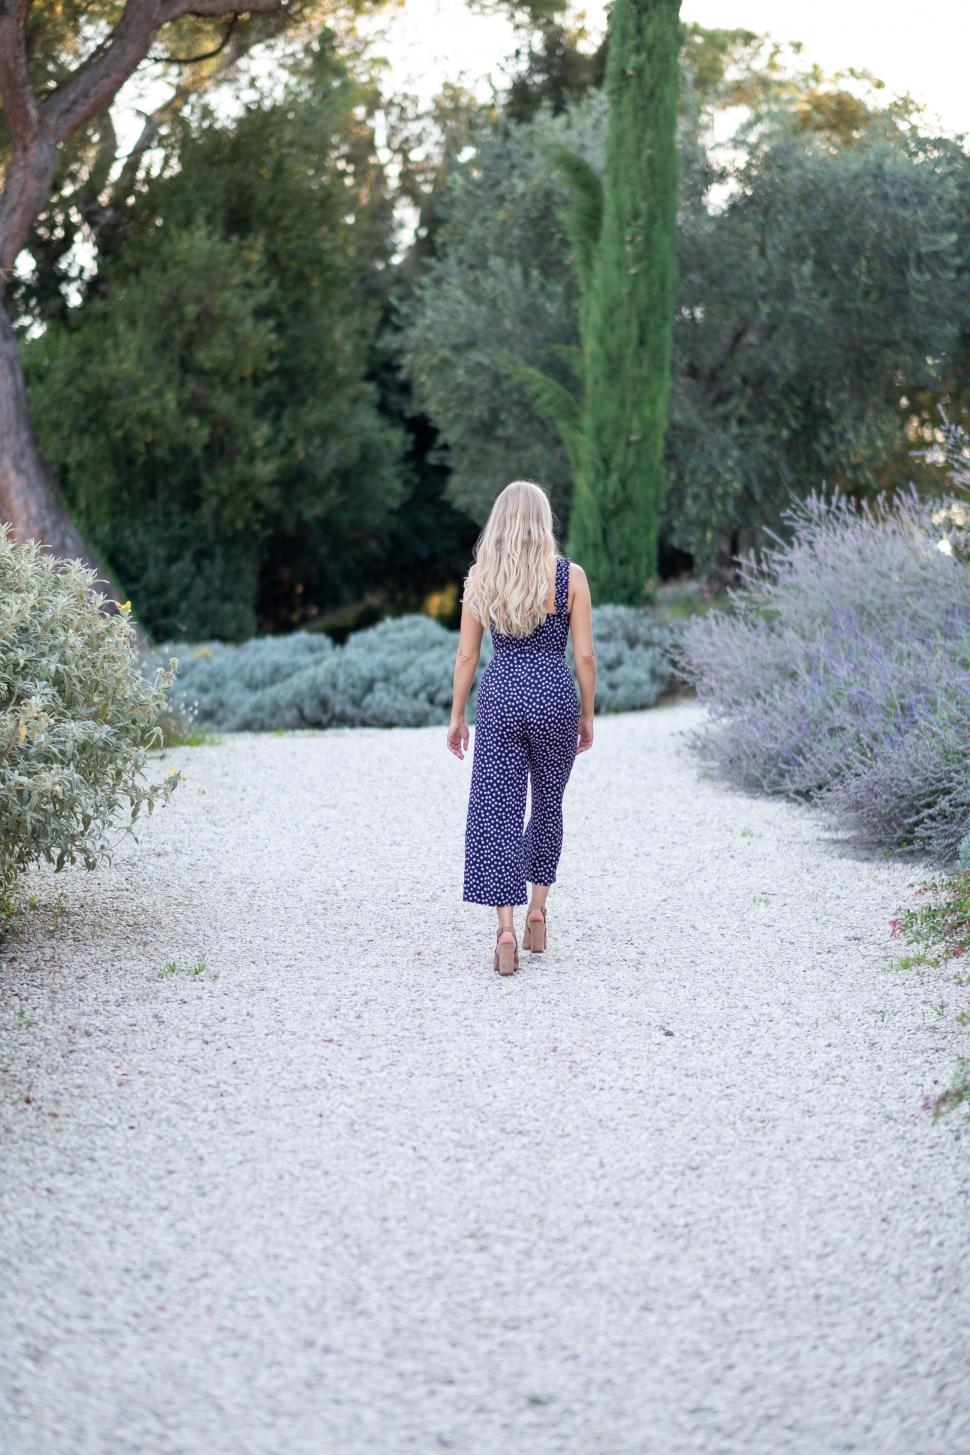 Free Image of Woman walking through garden in summer dress 